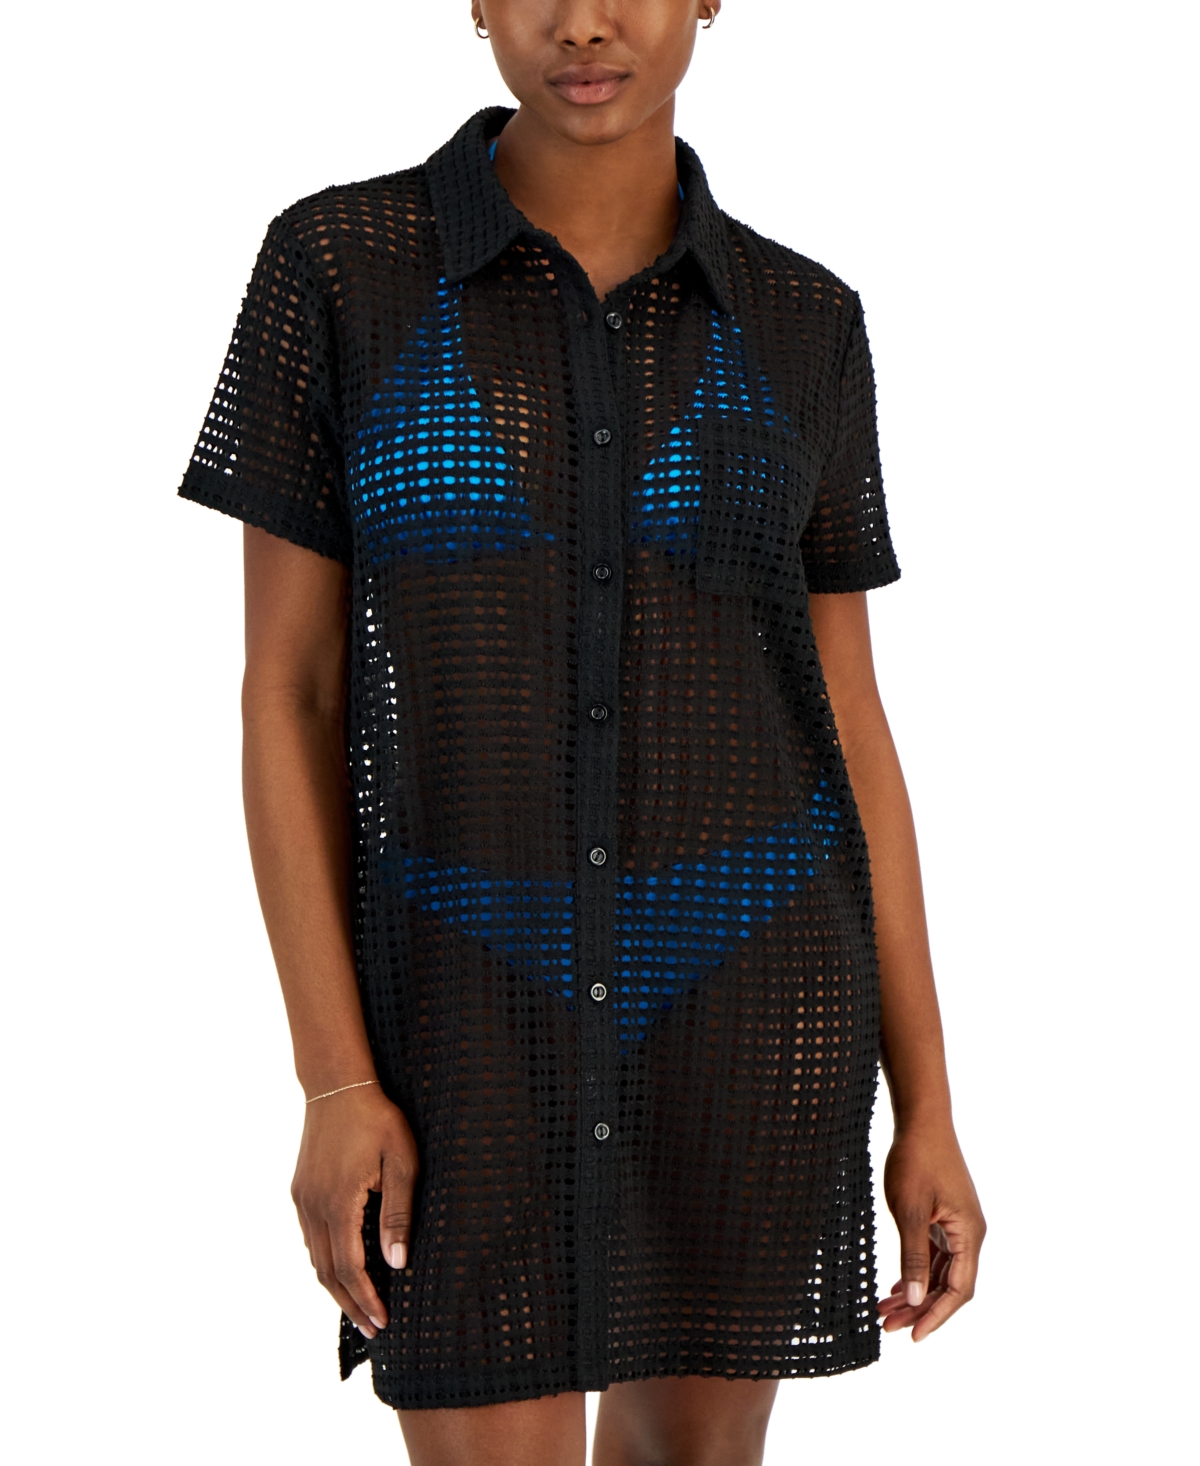 Women's Crochet Tunic Shirt Cover-Up, Created for Macy's - Black